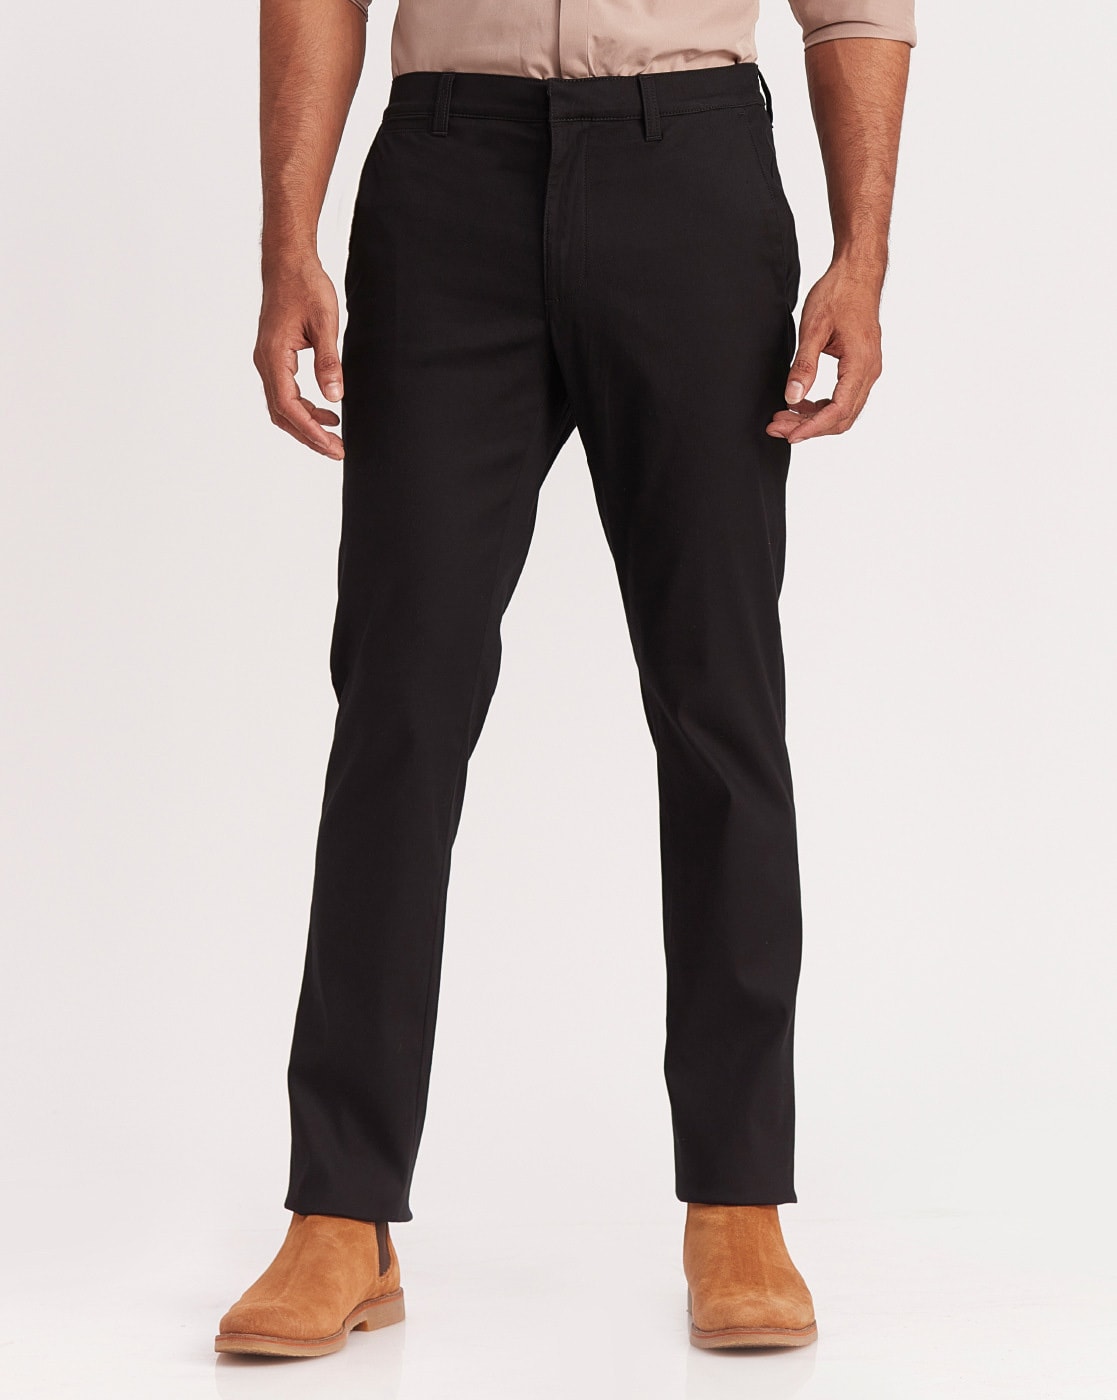 Chino trouser | Pants | Men's | Ferragamo GB